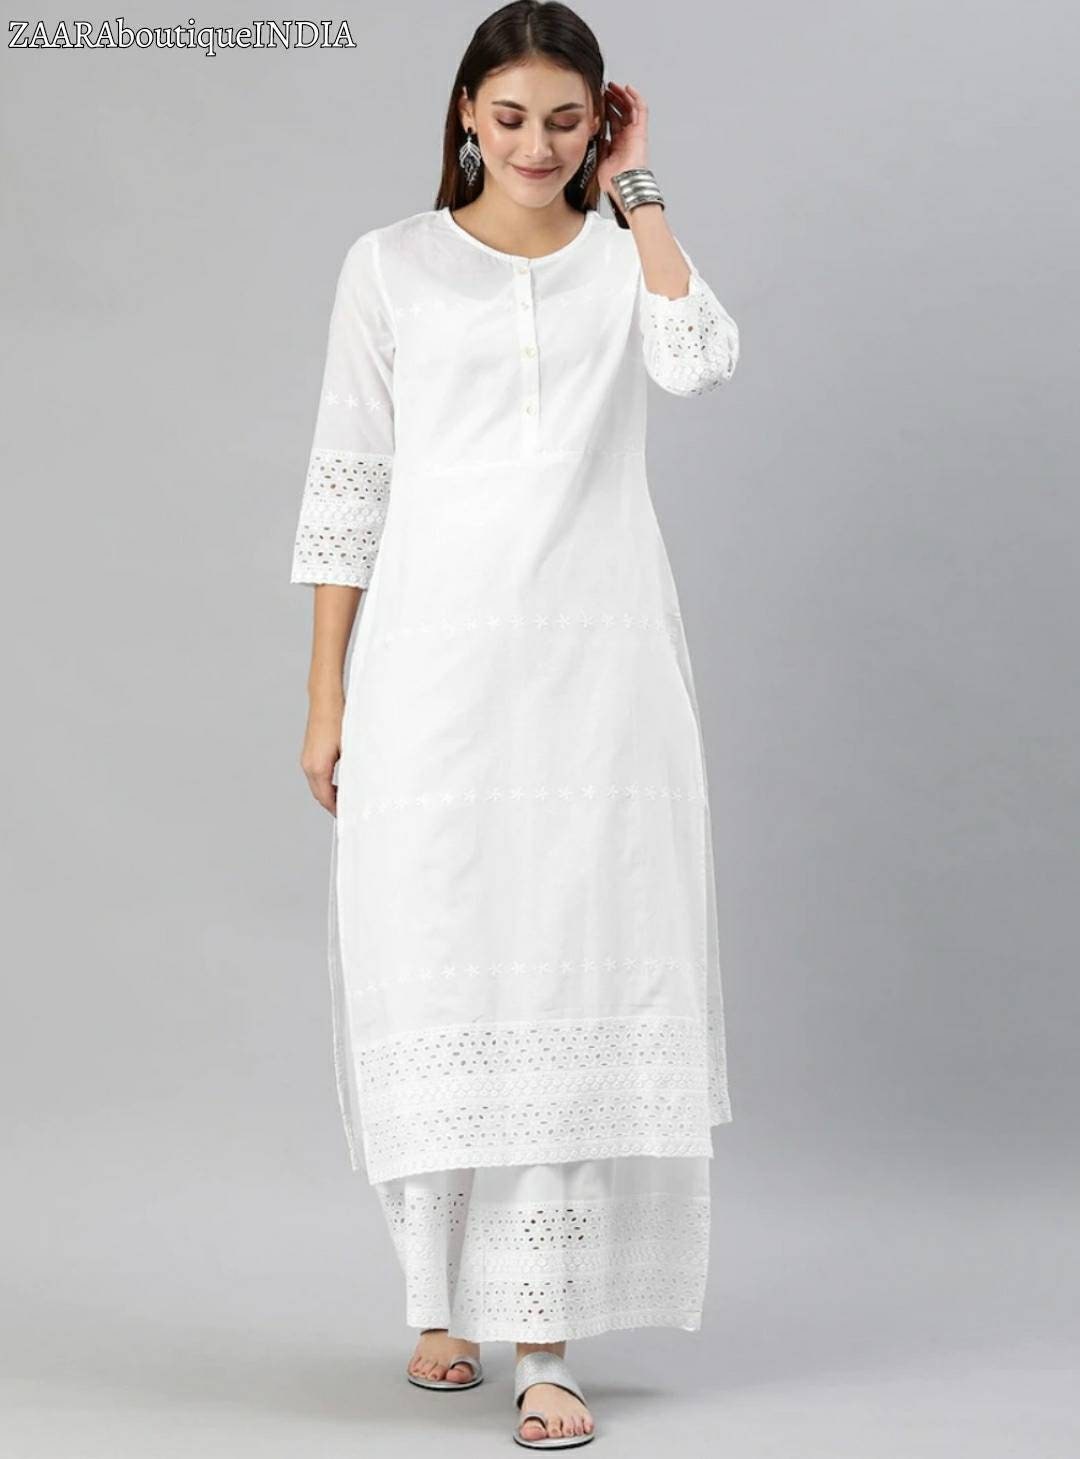 Category: Kurti - Indian Dresses